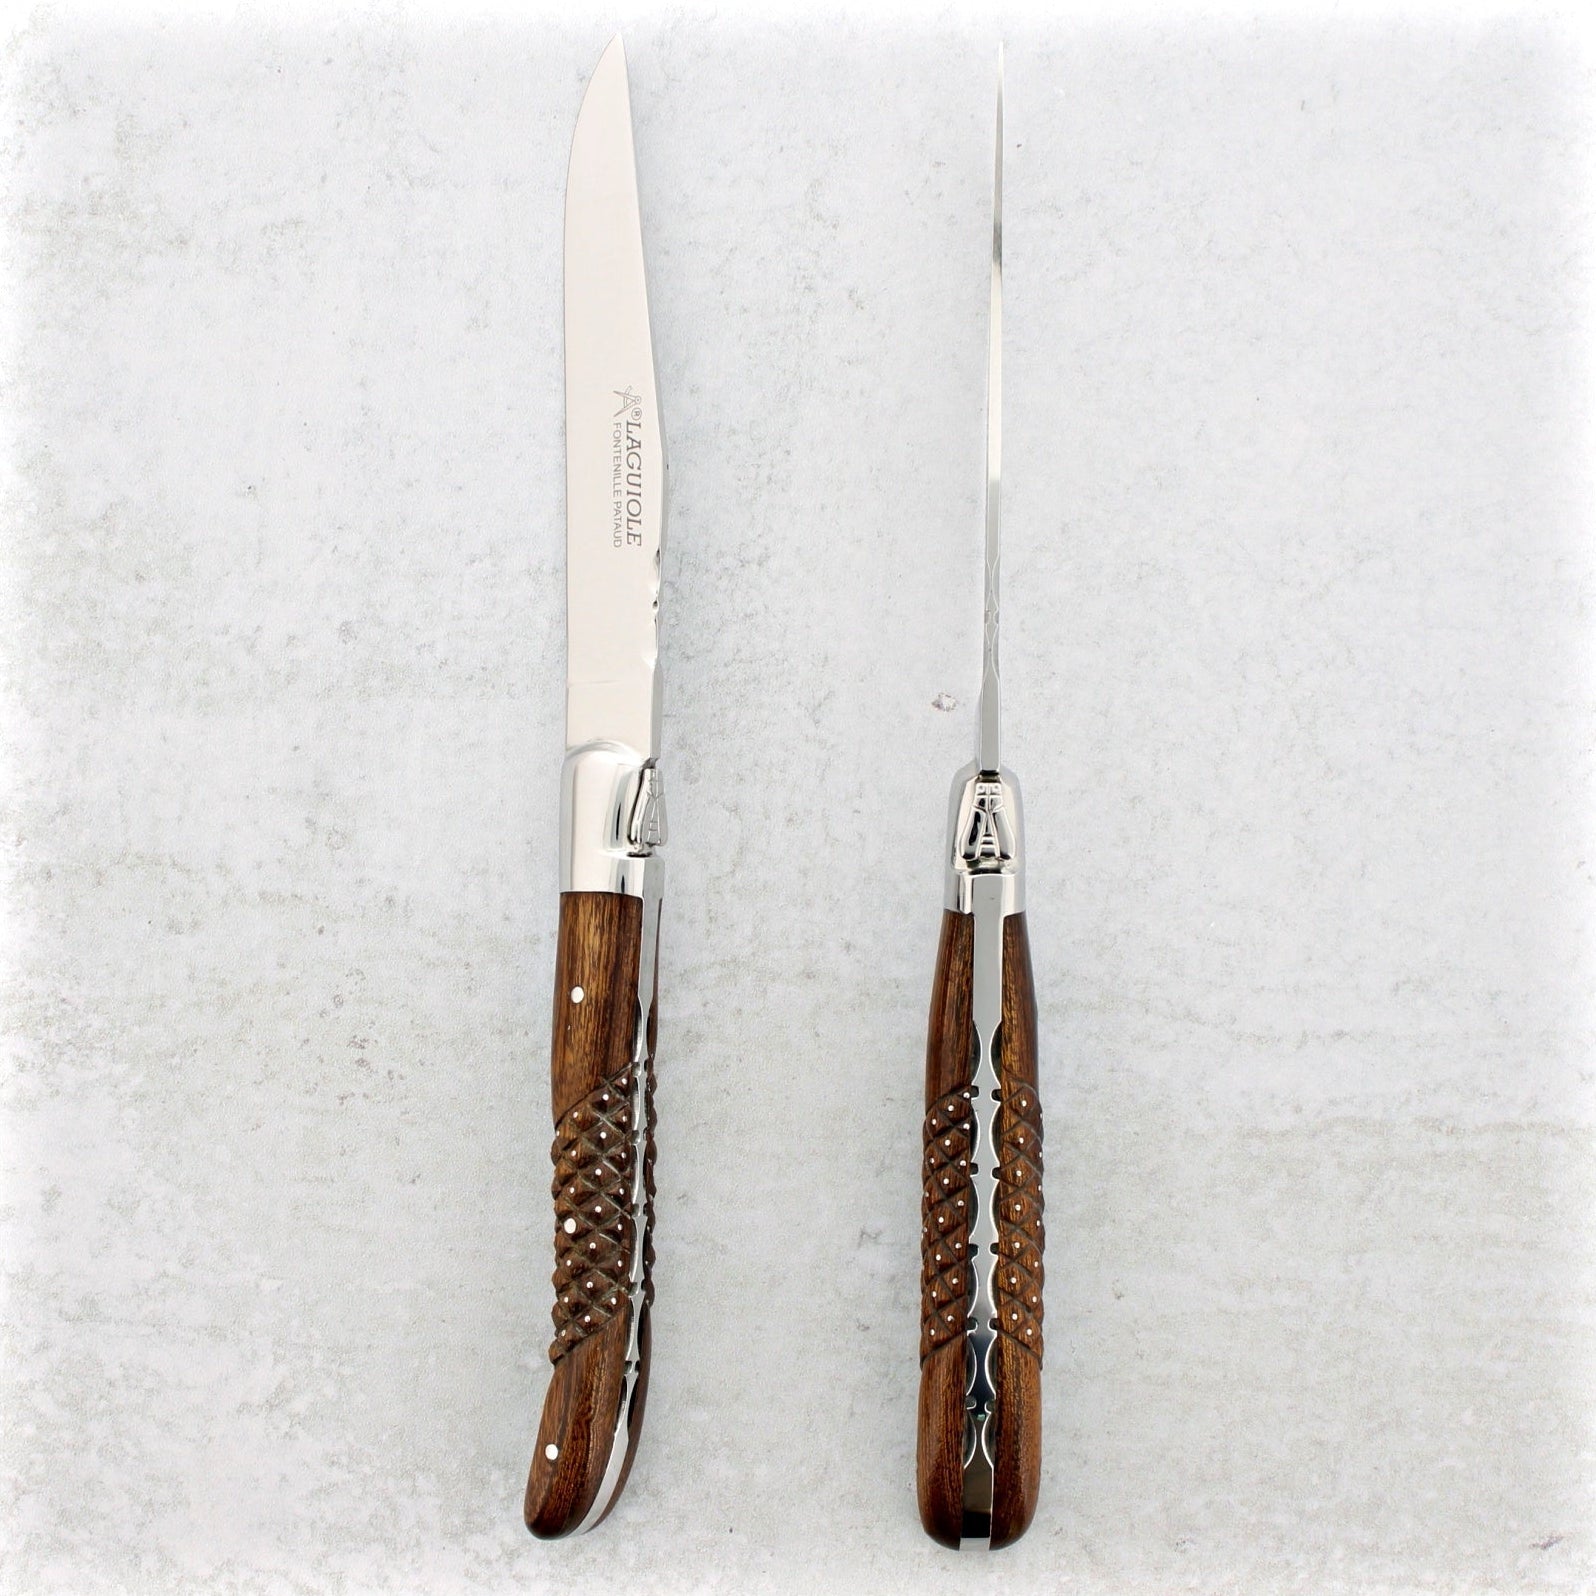 Olneya Ironwood Steak Knife Set - Handmade in USA